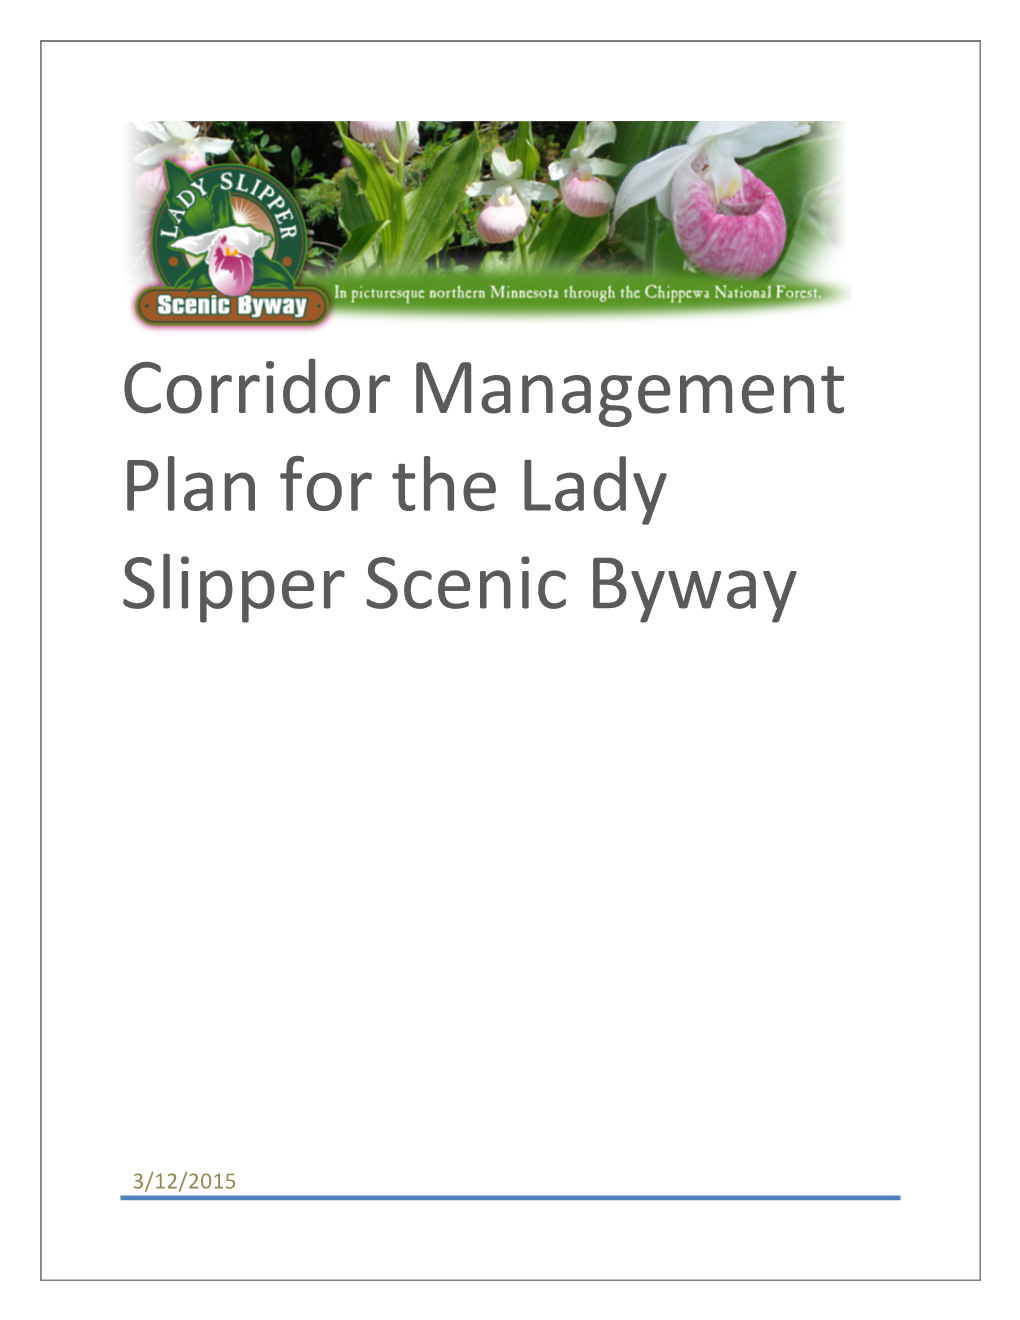 Lady Slipper Scenic Byway Corridor Management Plan